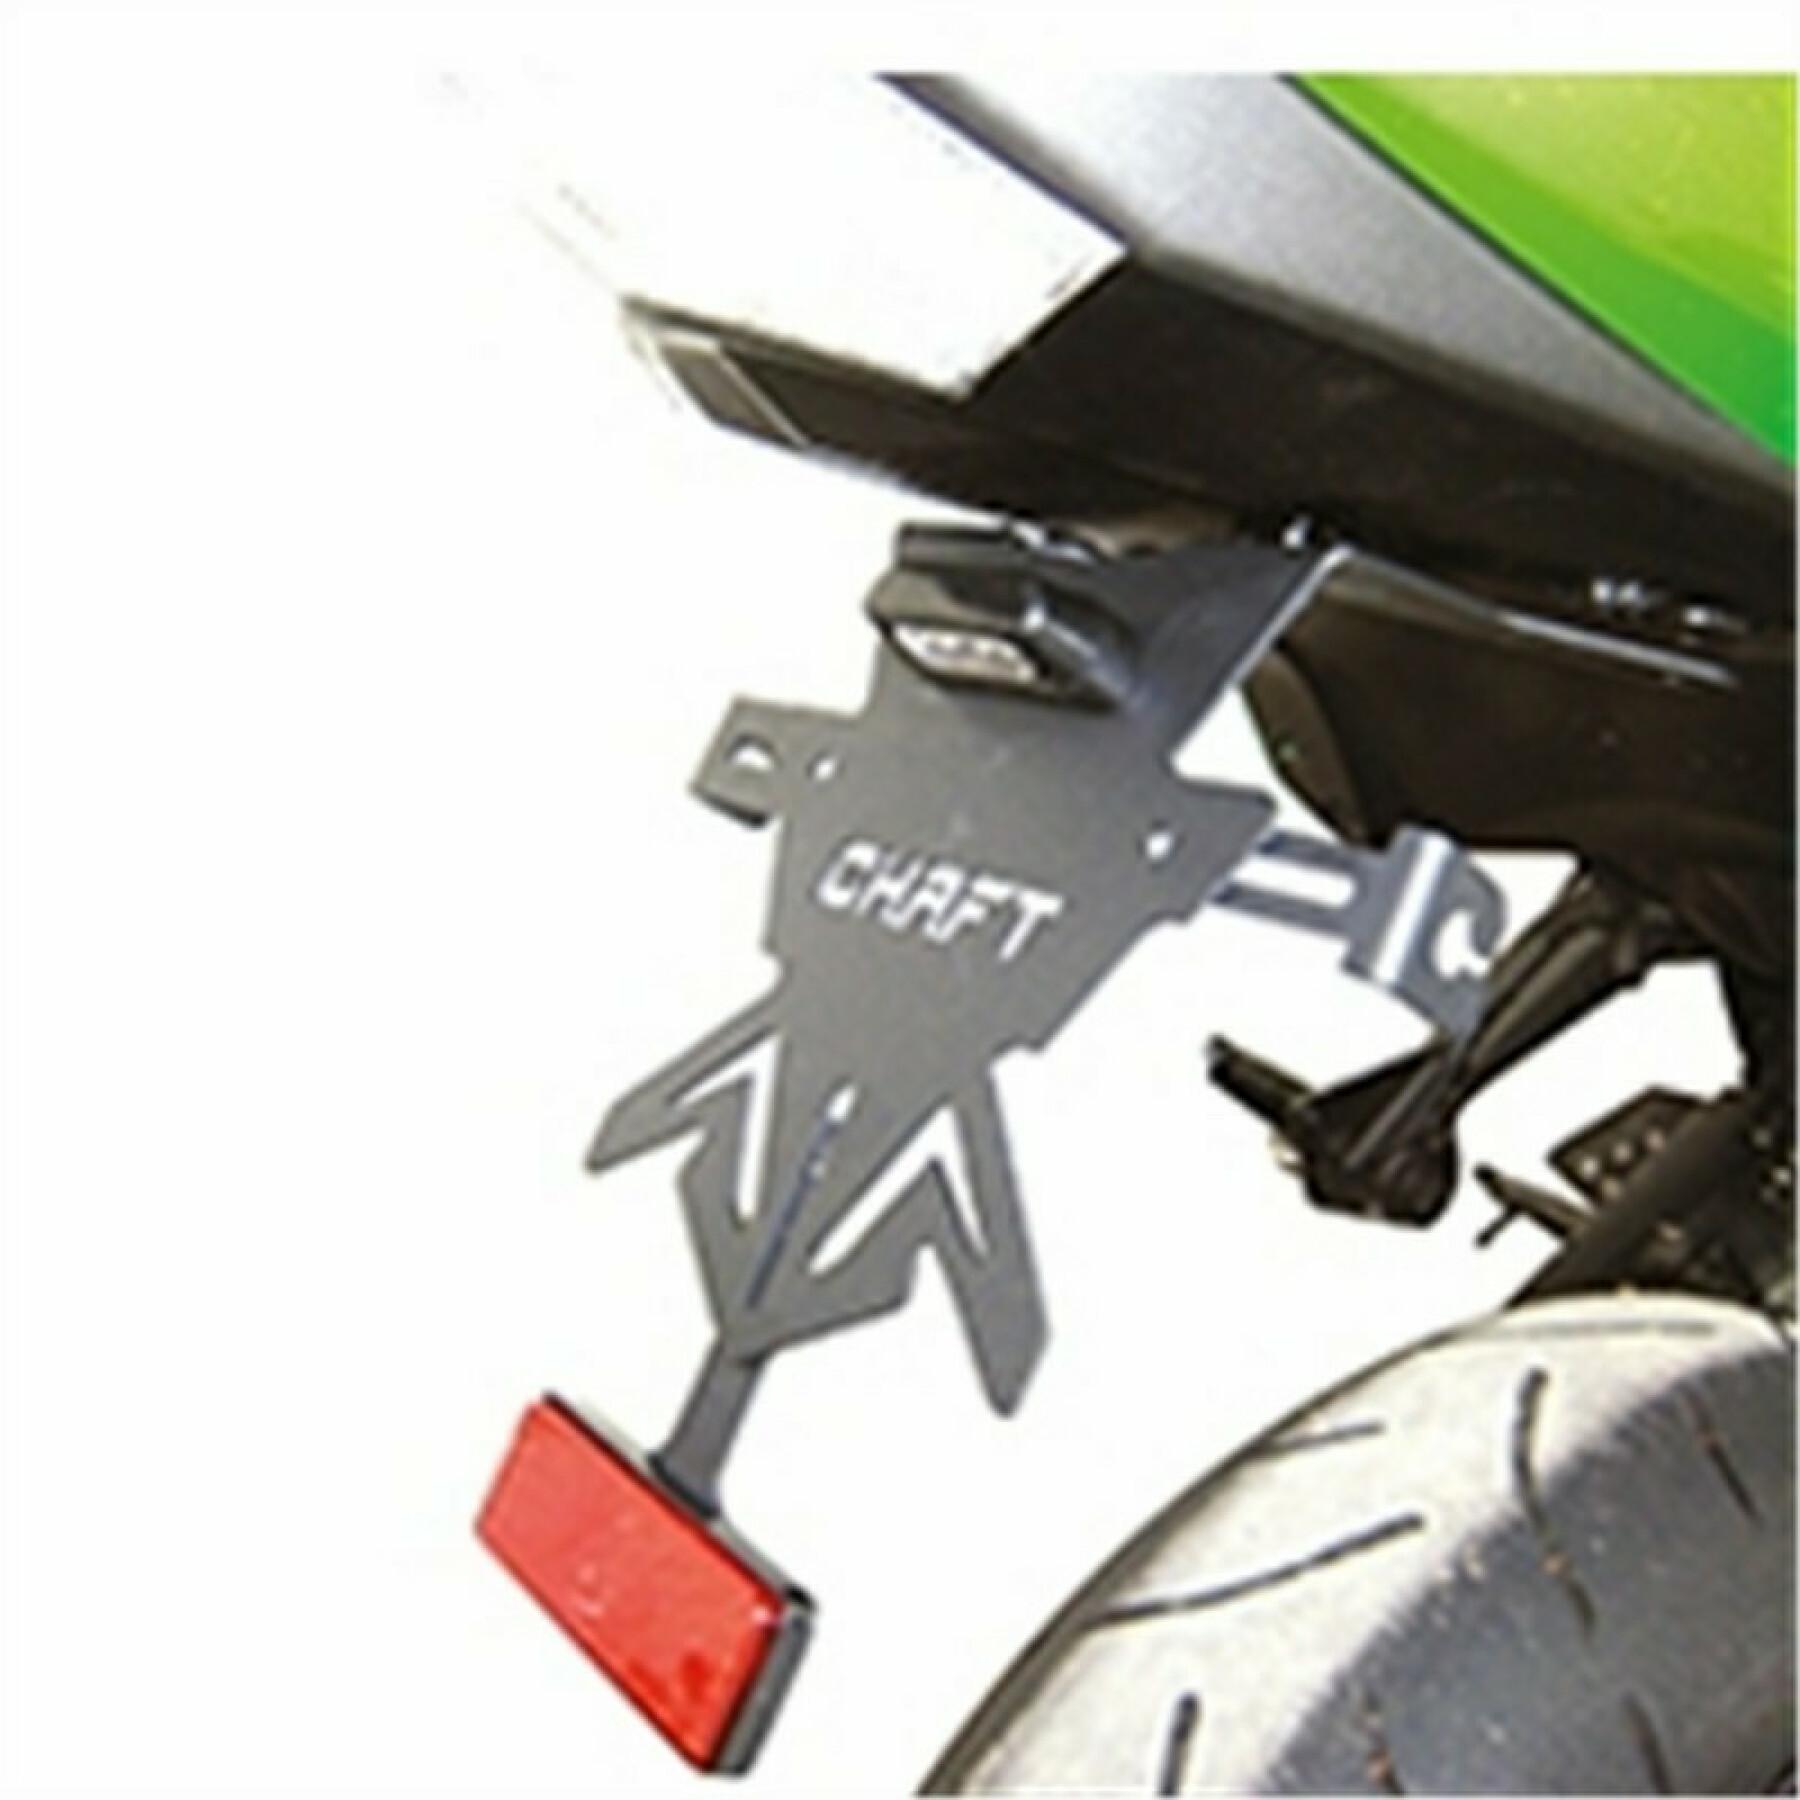 Portatarga Chaft Z 750/R 2007-2012Z 1000 2007-2009